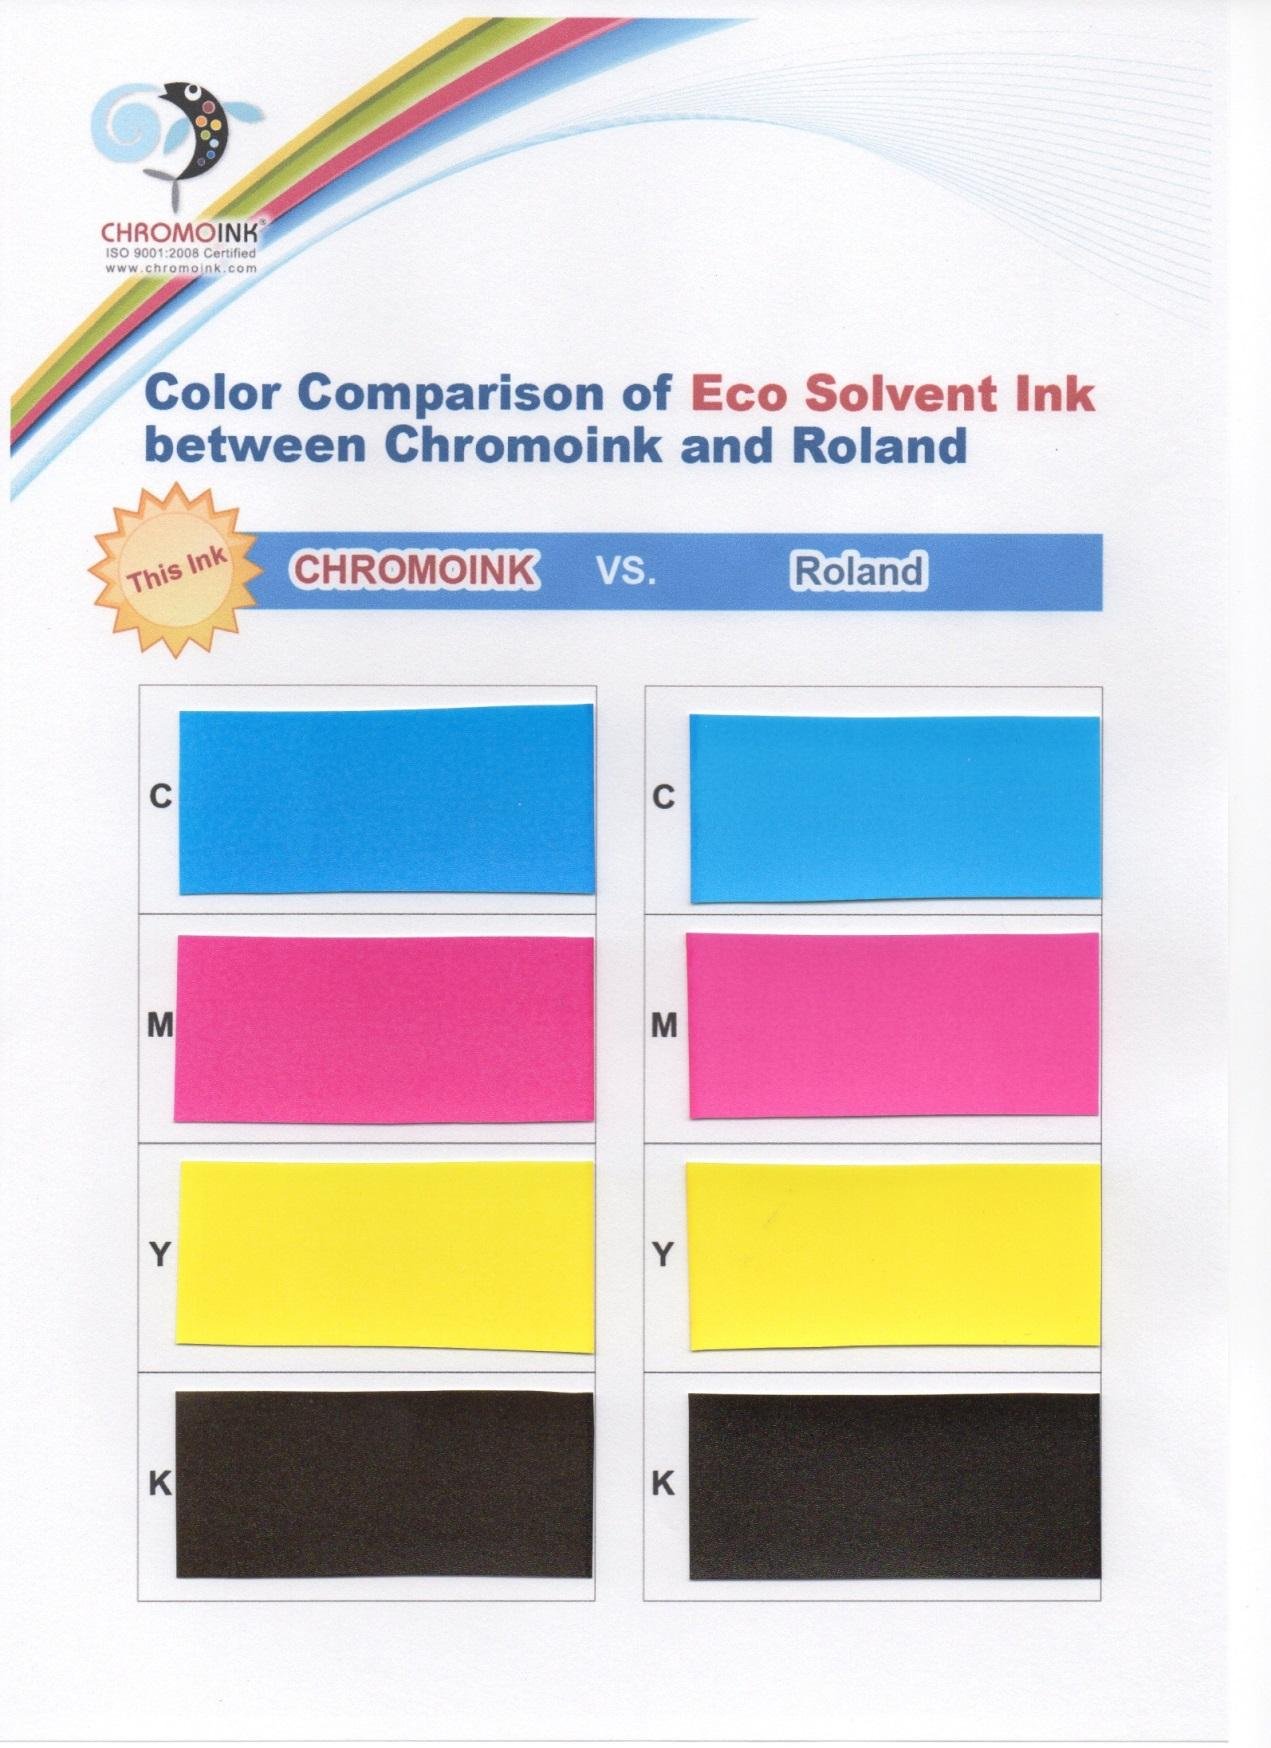 CHROMOINK Eco Solvent ink for EPSON 4